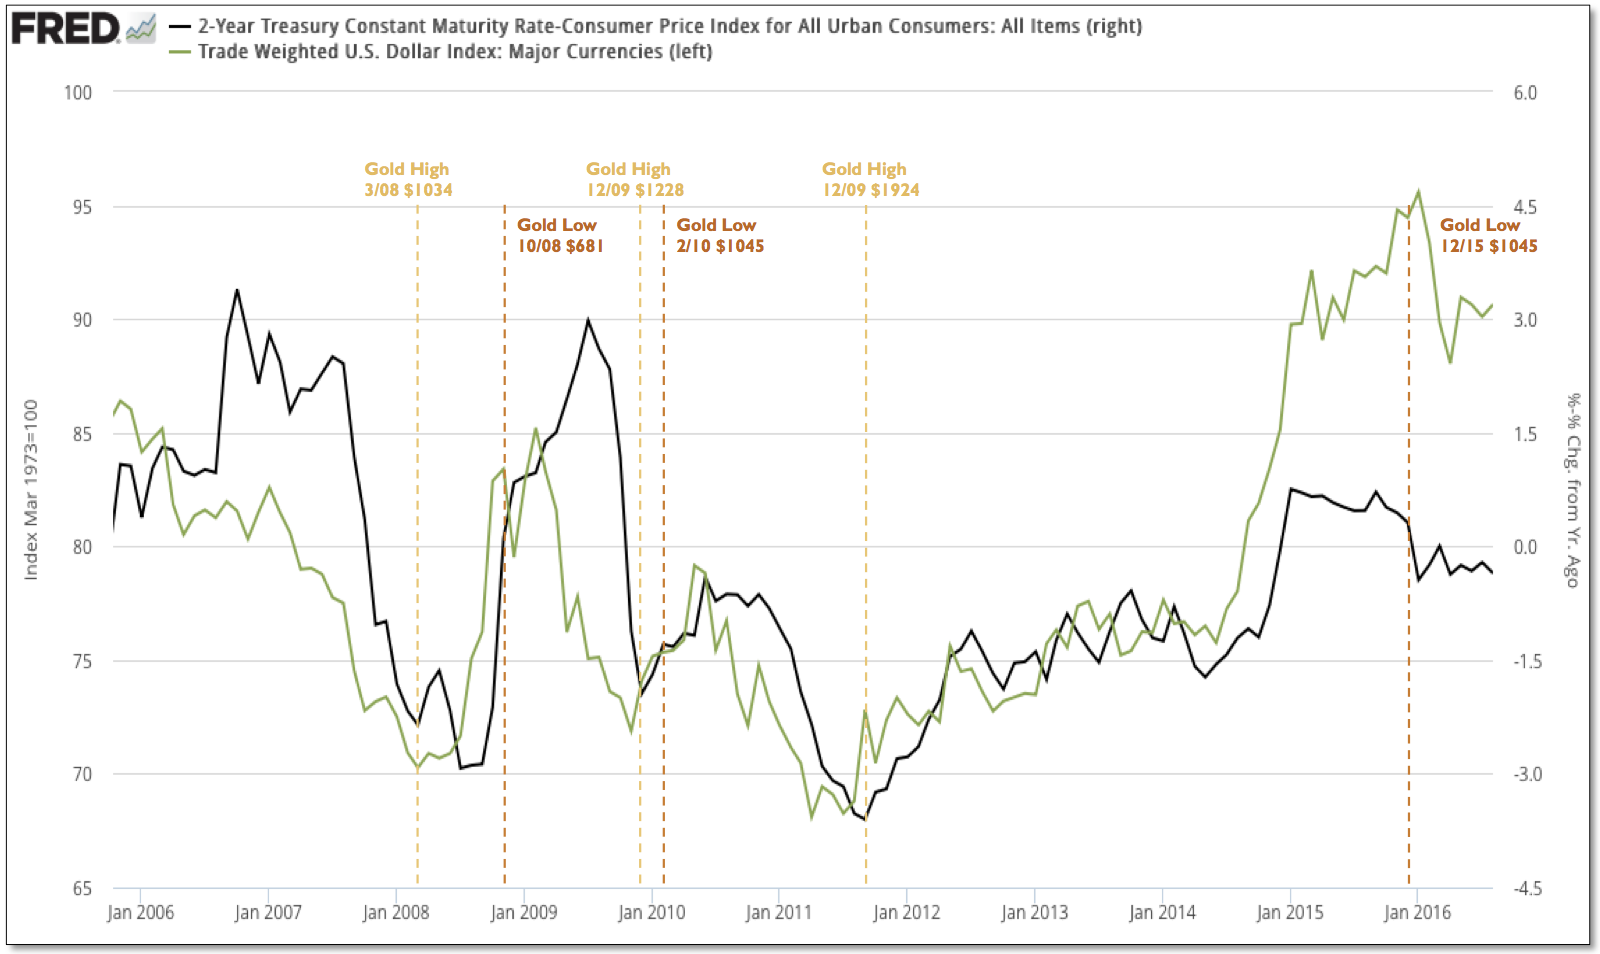 2-Year Treasury vs Trade Weighted USD 2006-2016